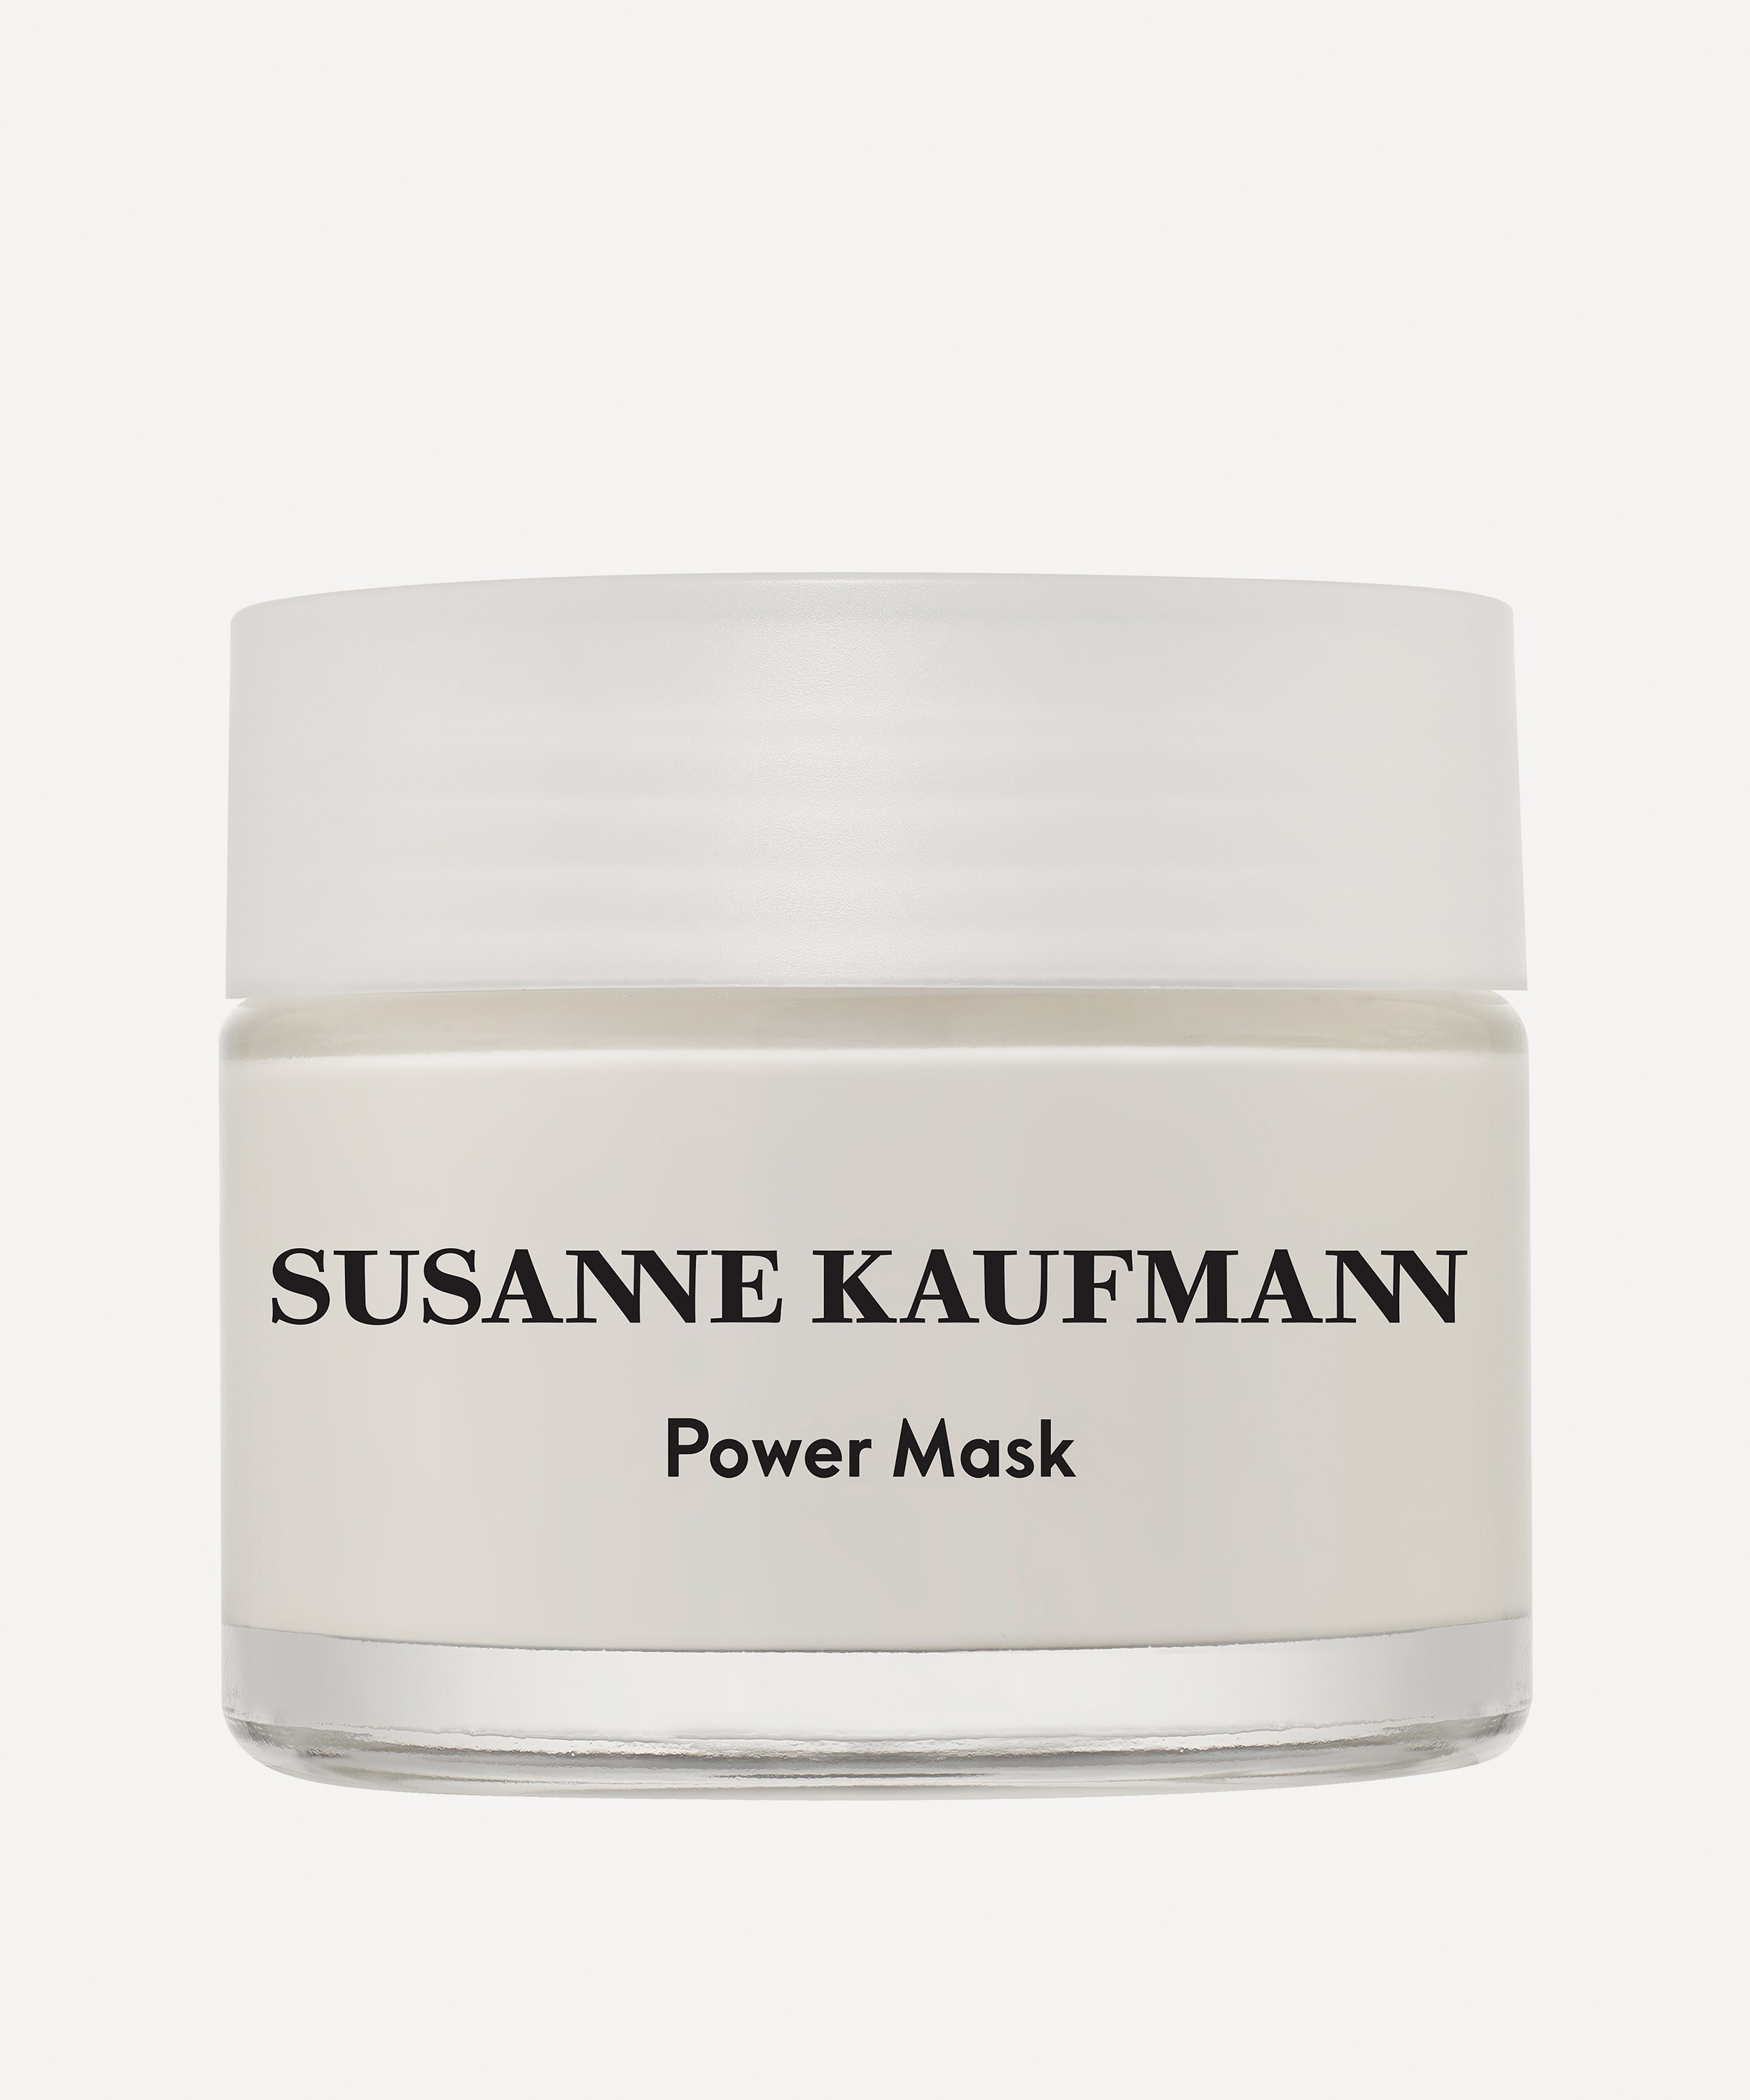 Susanne Kaufmann - Power Mask 50ml image number 0